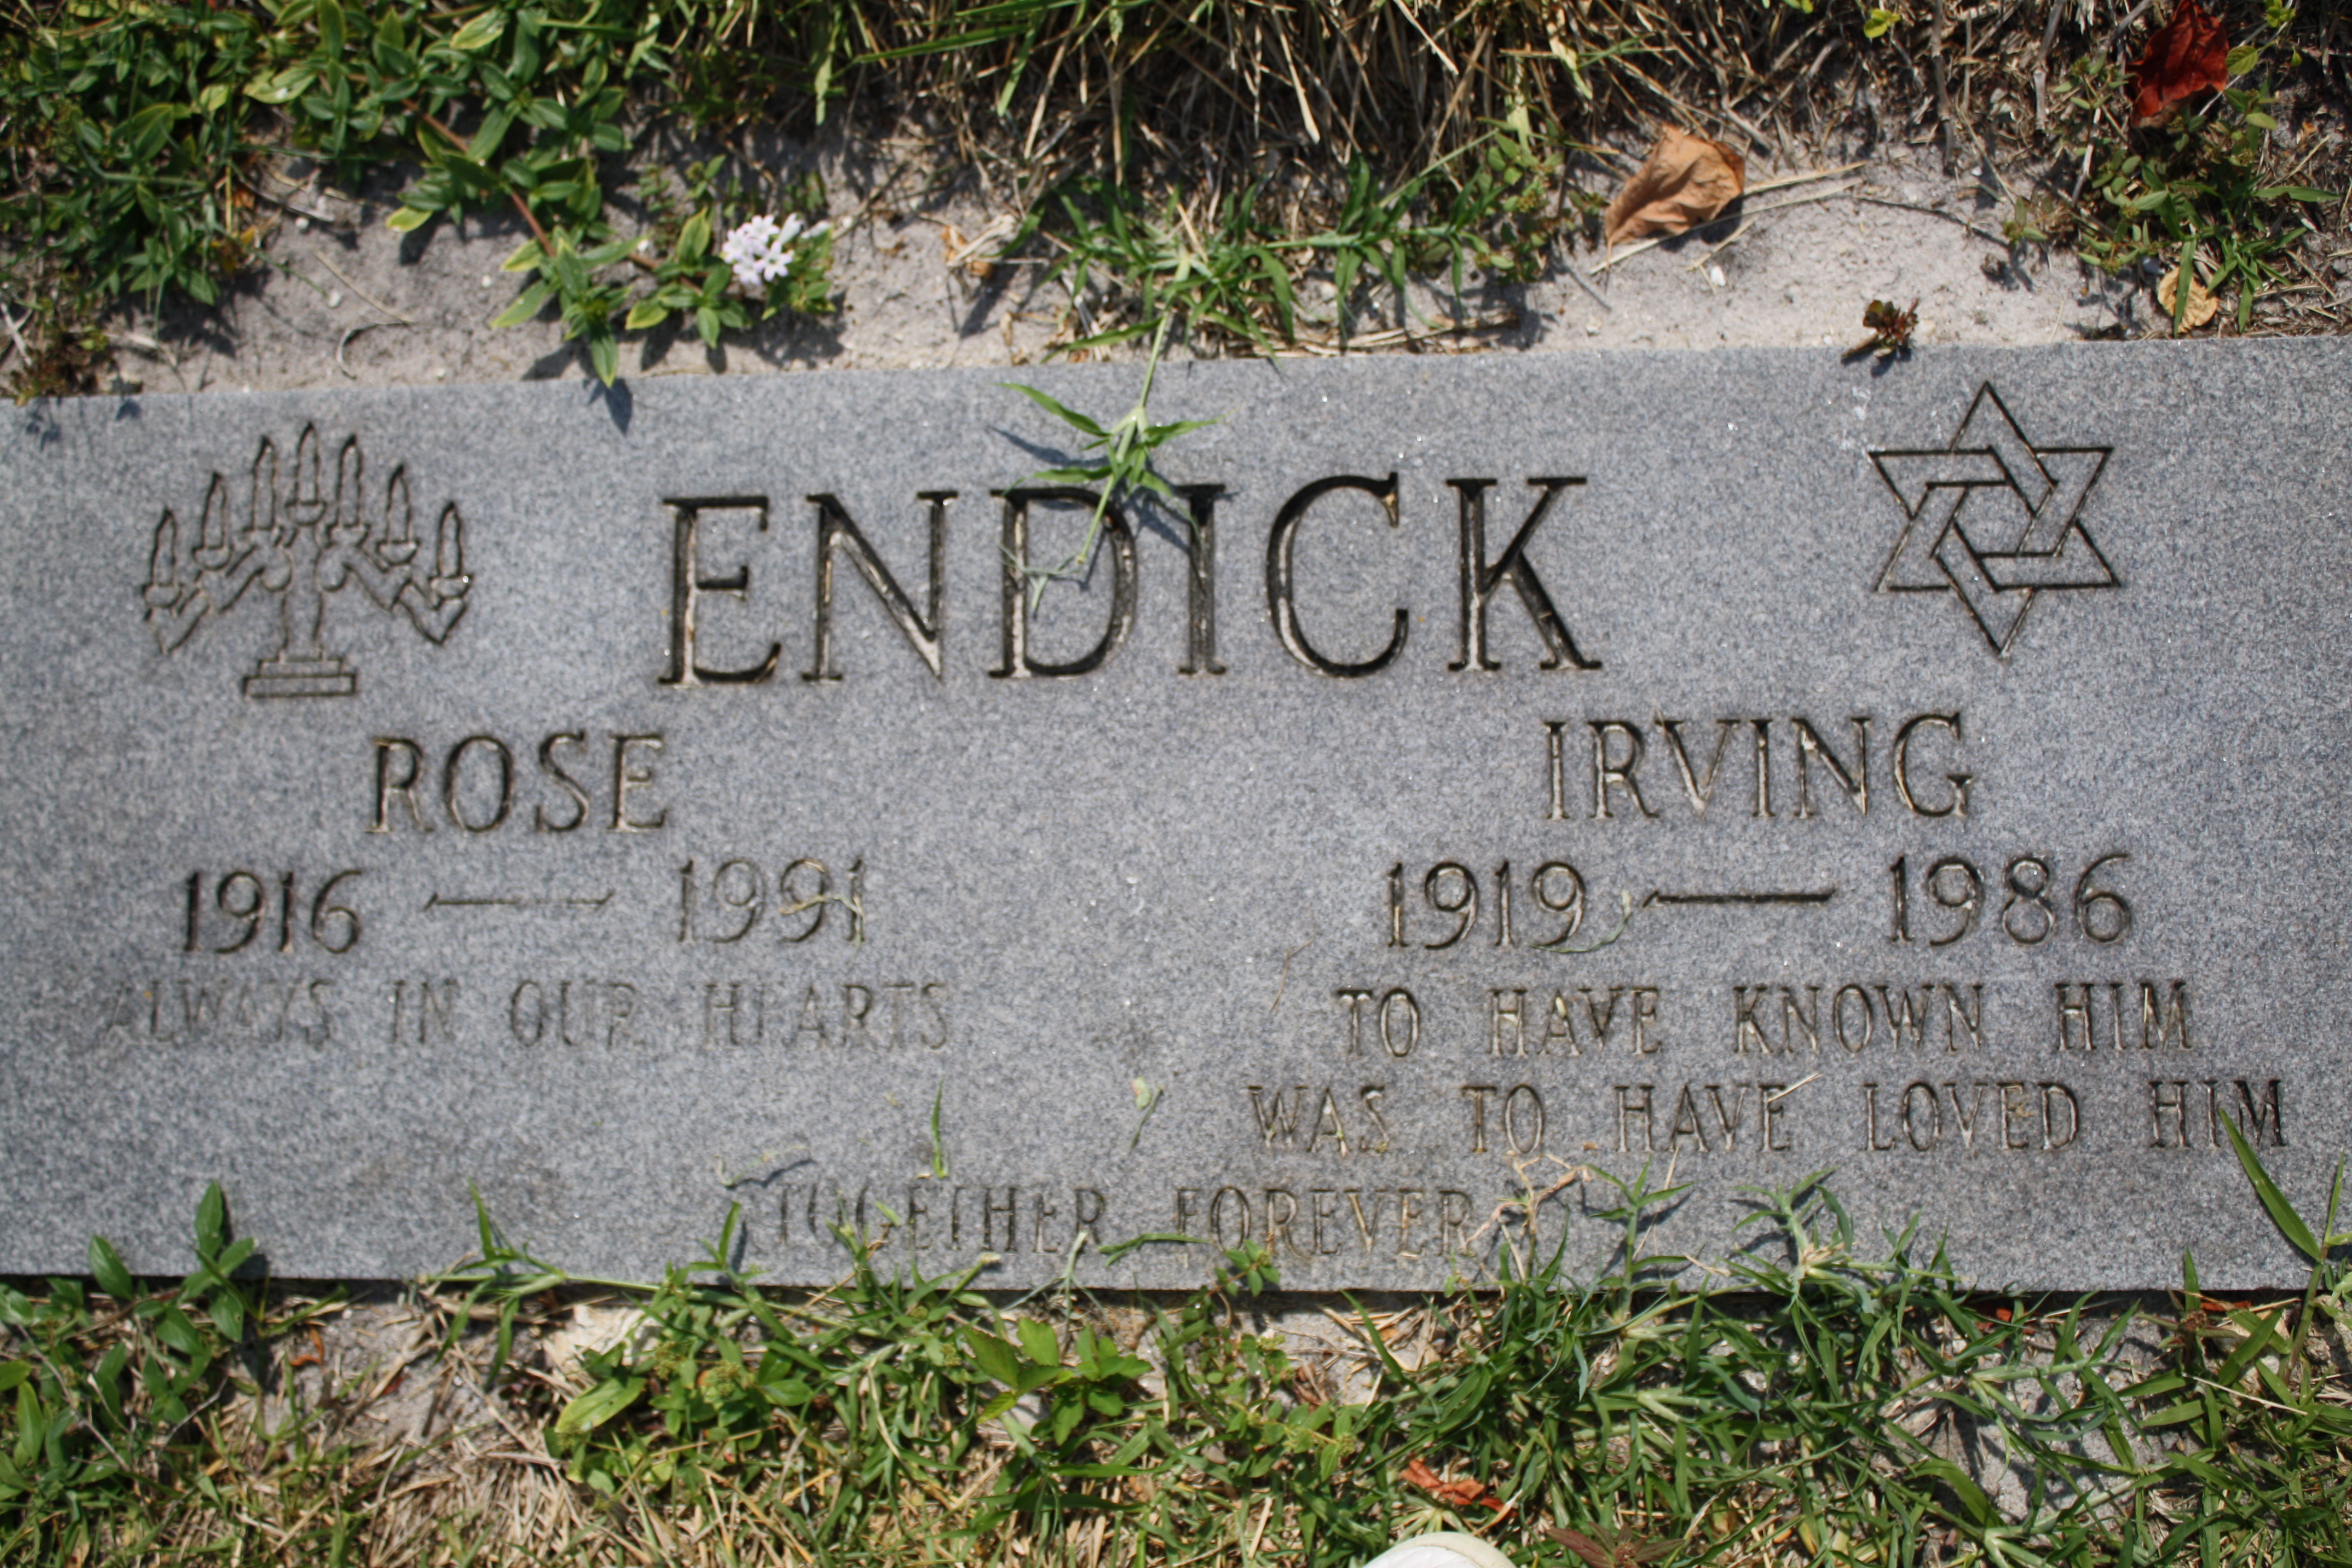 Irving Endick